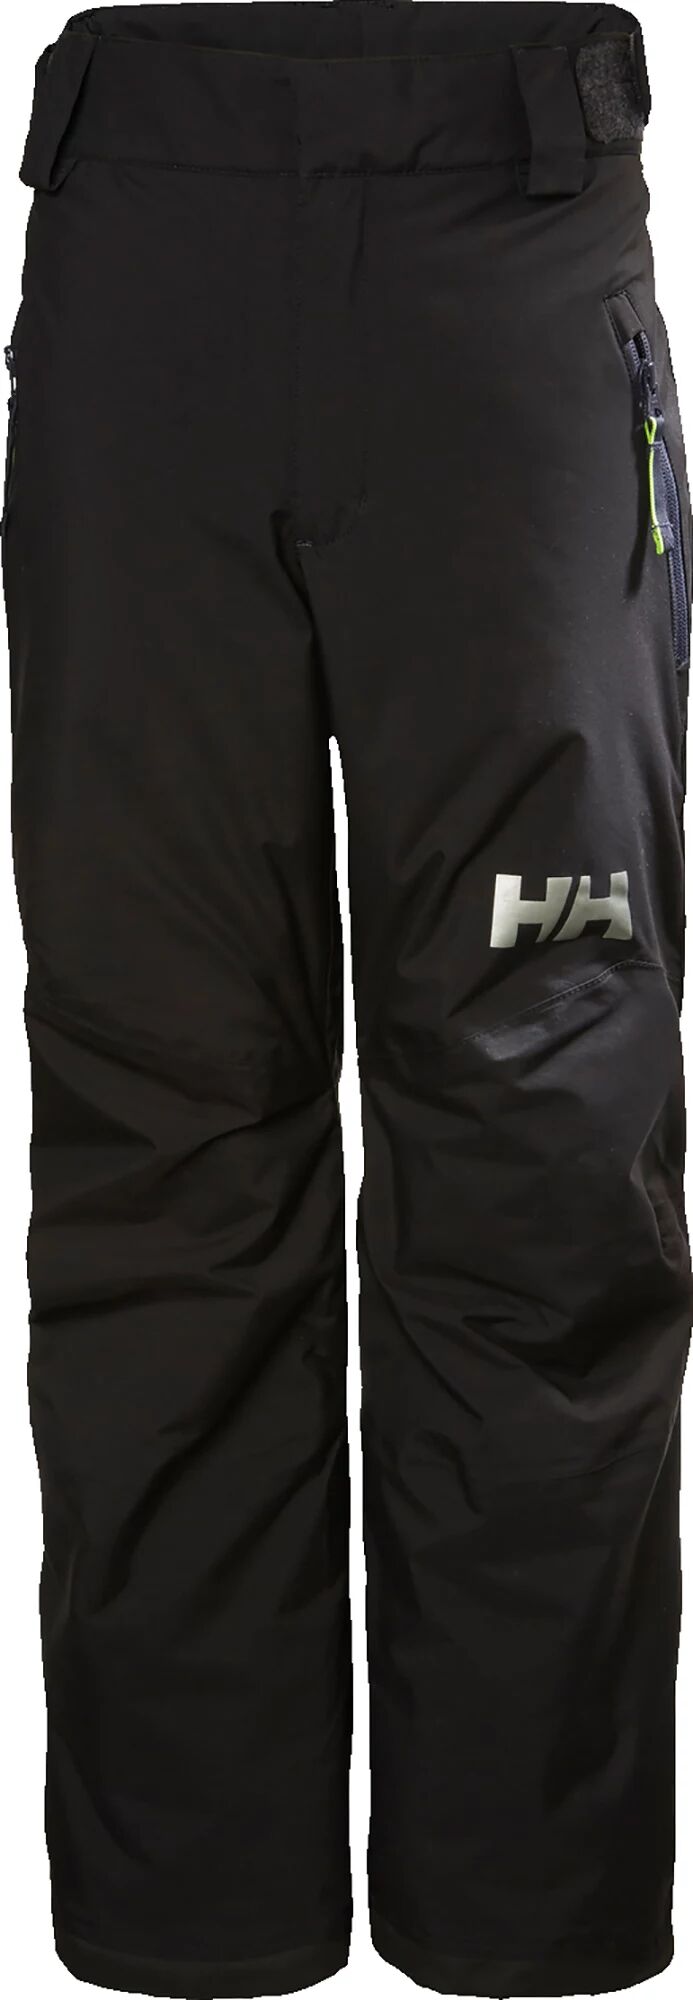 Helly Hansen Junior's Legendary Pants, Boys', Size 10, Black